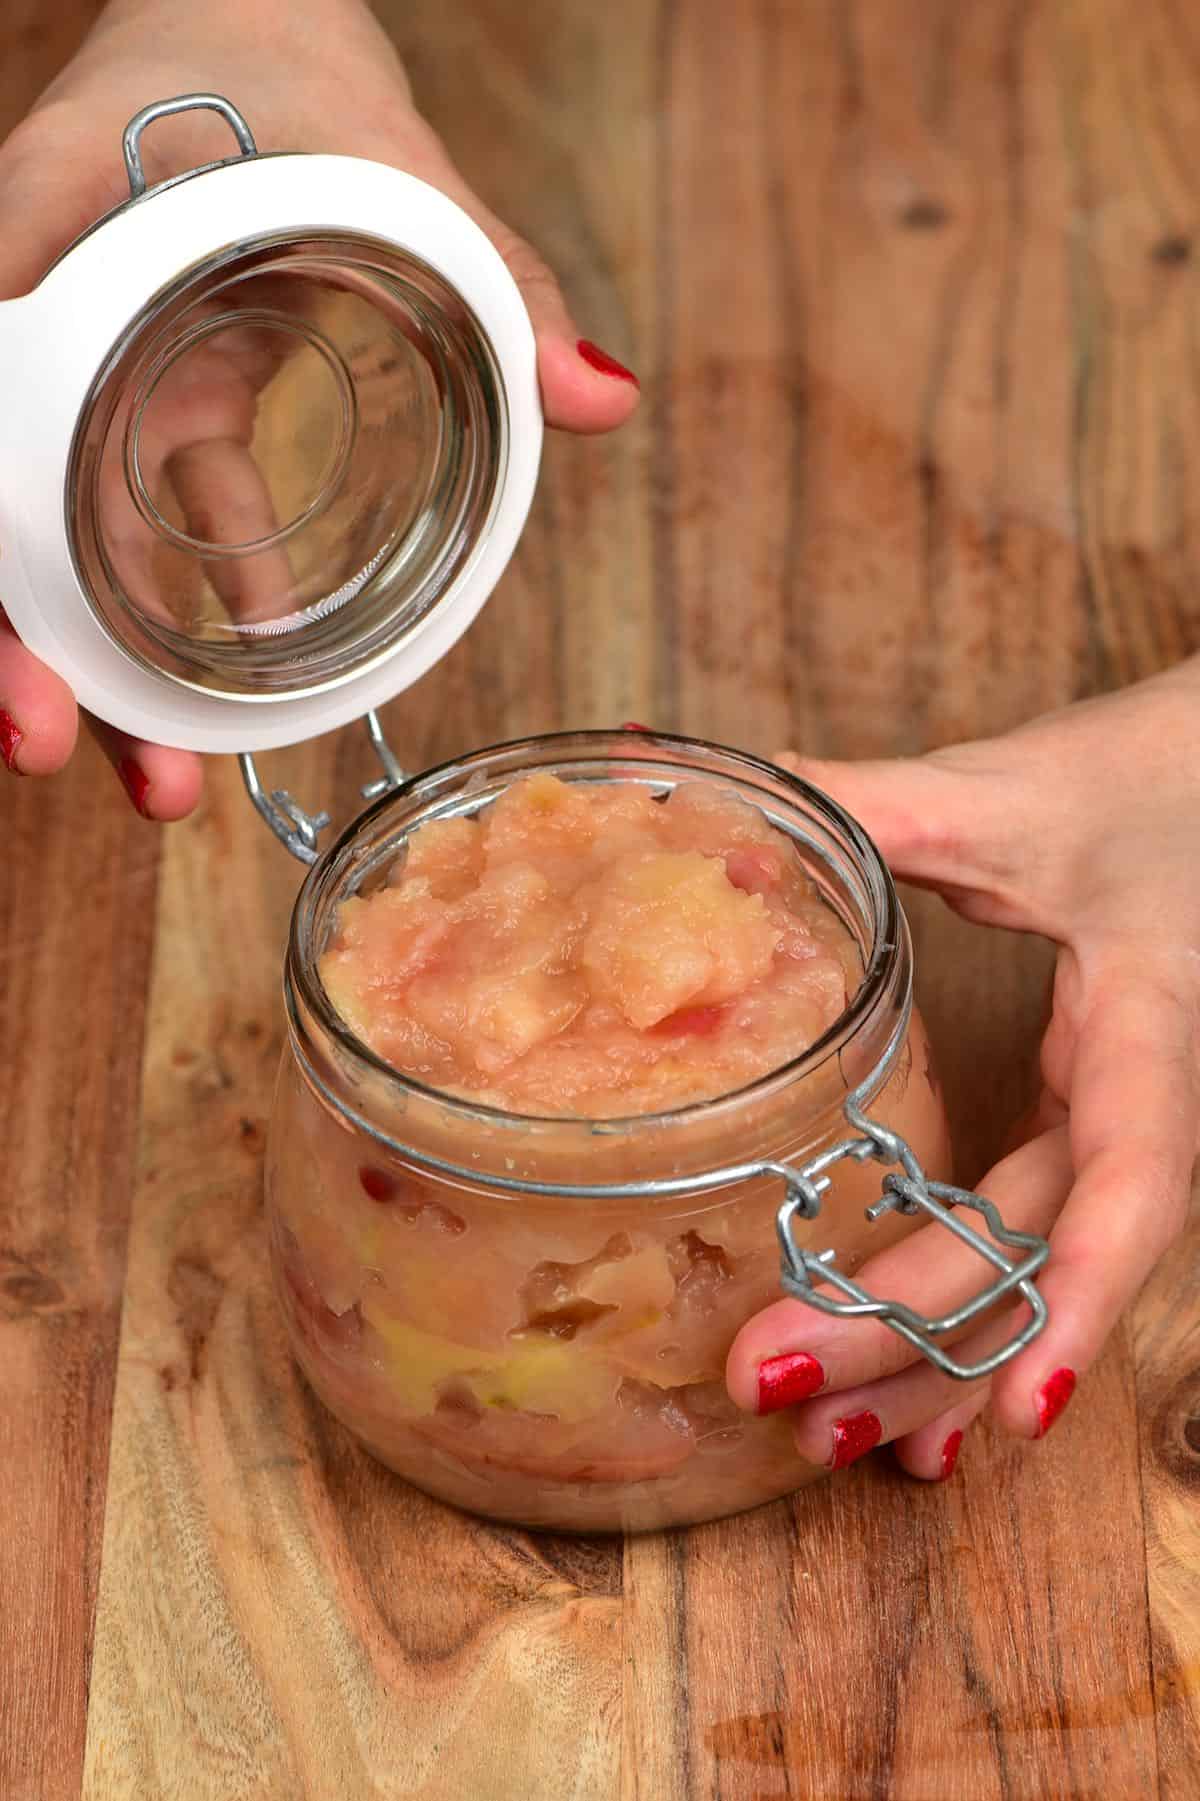 Applesauce in a jar